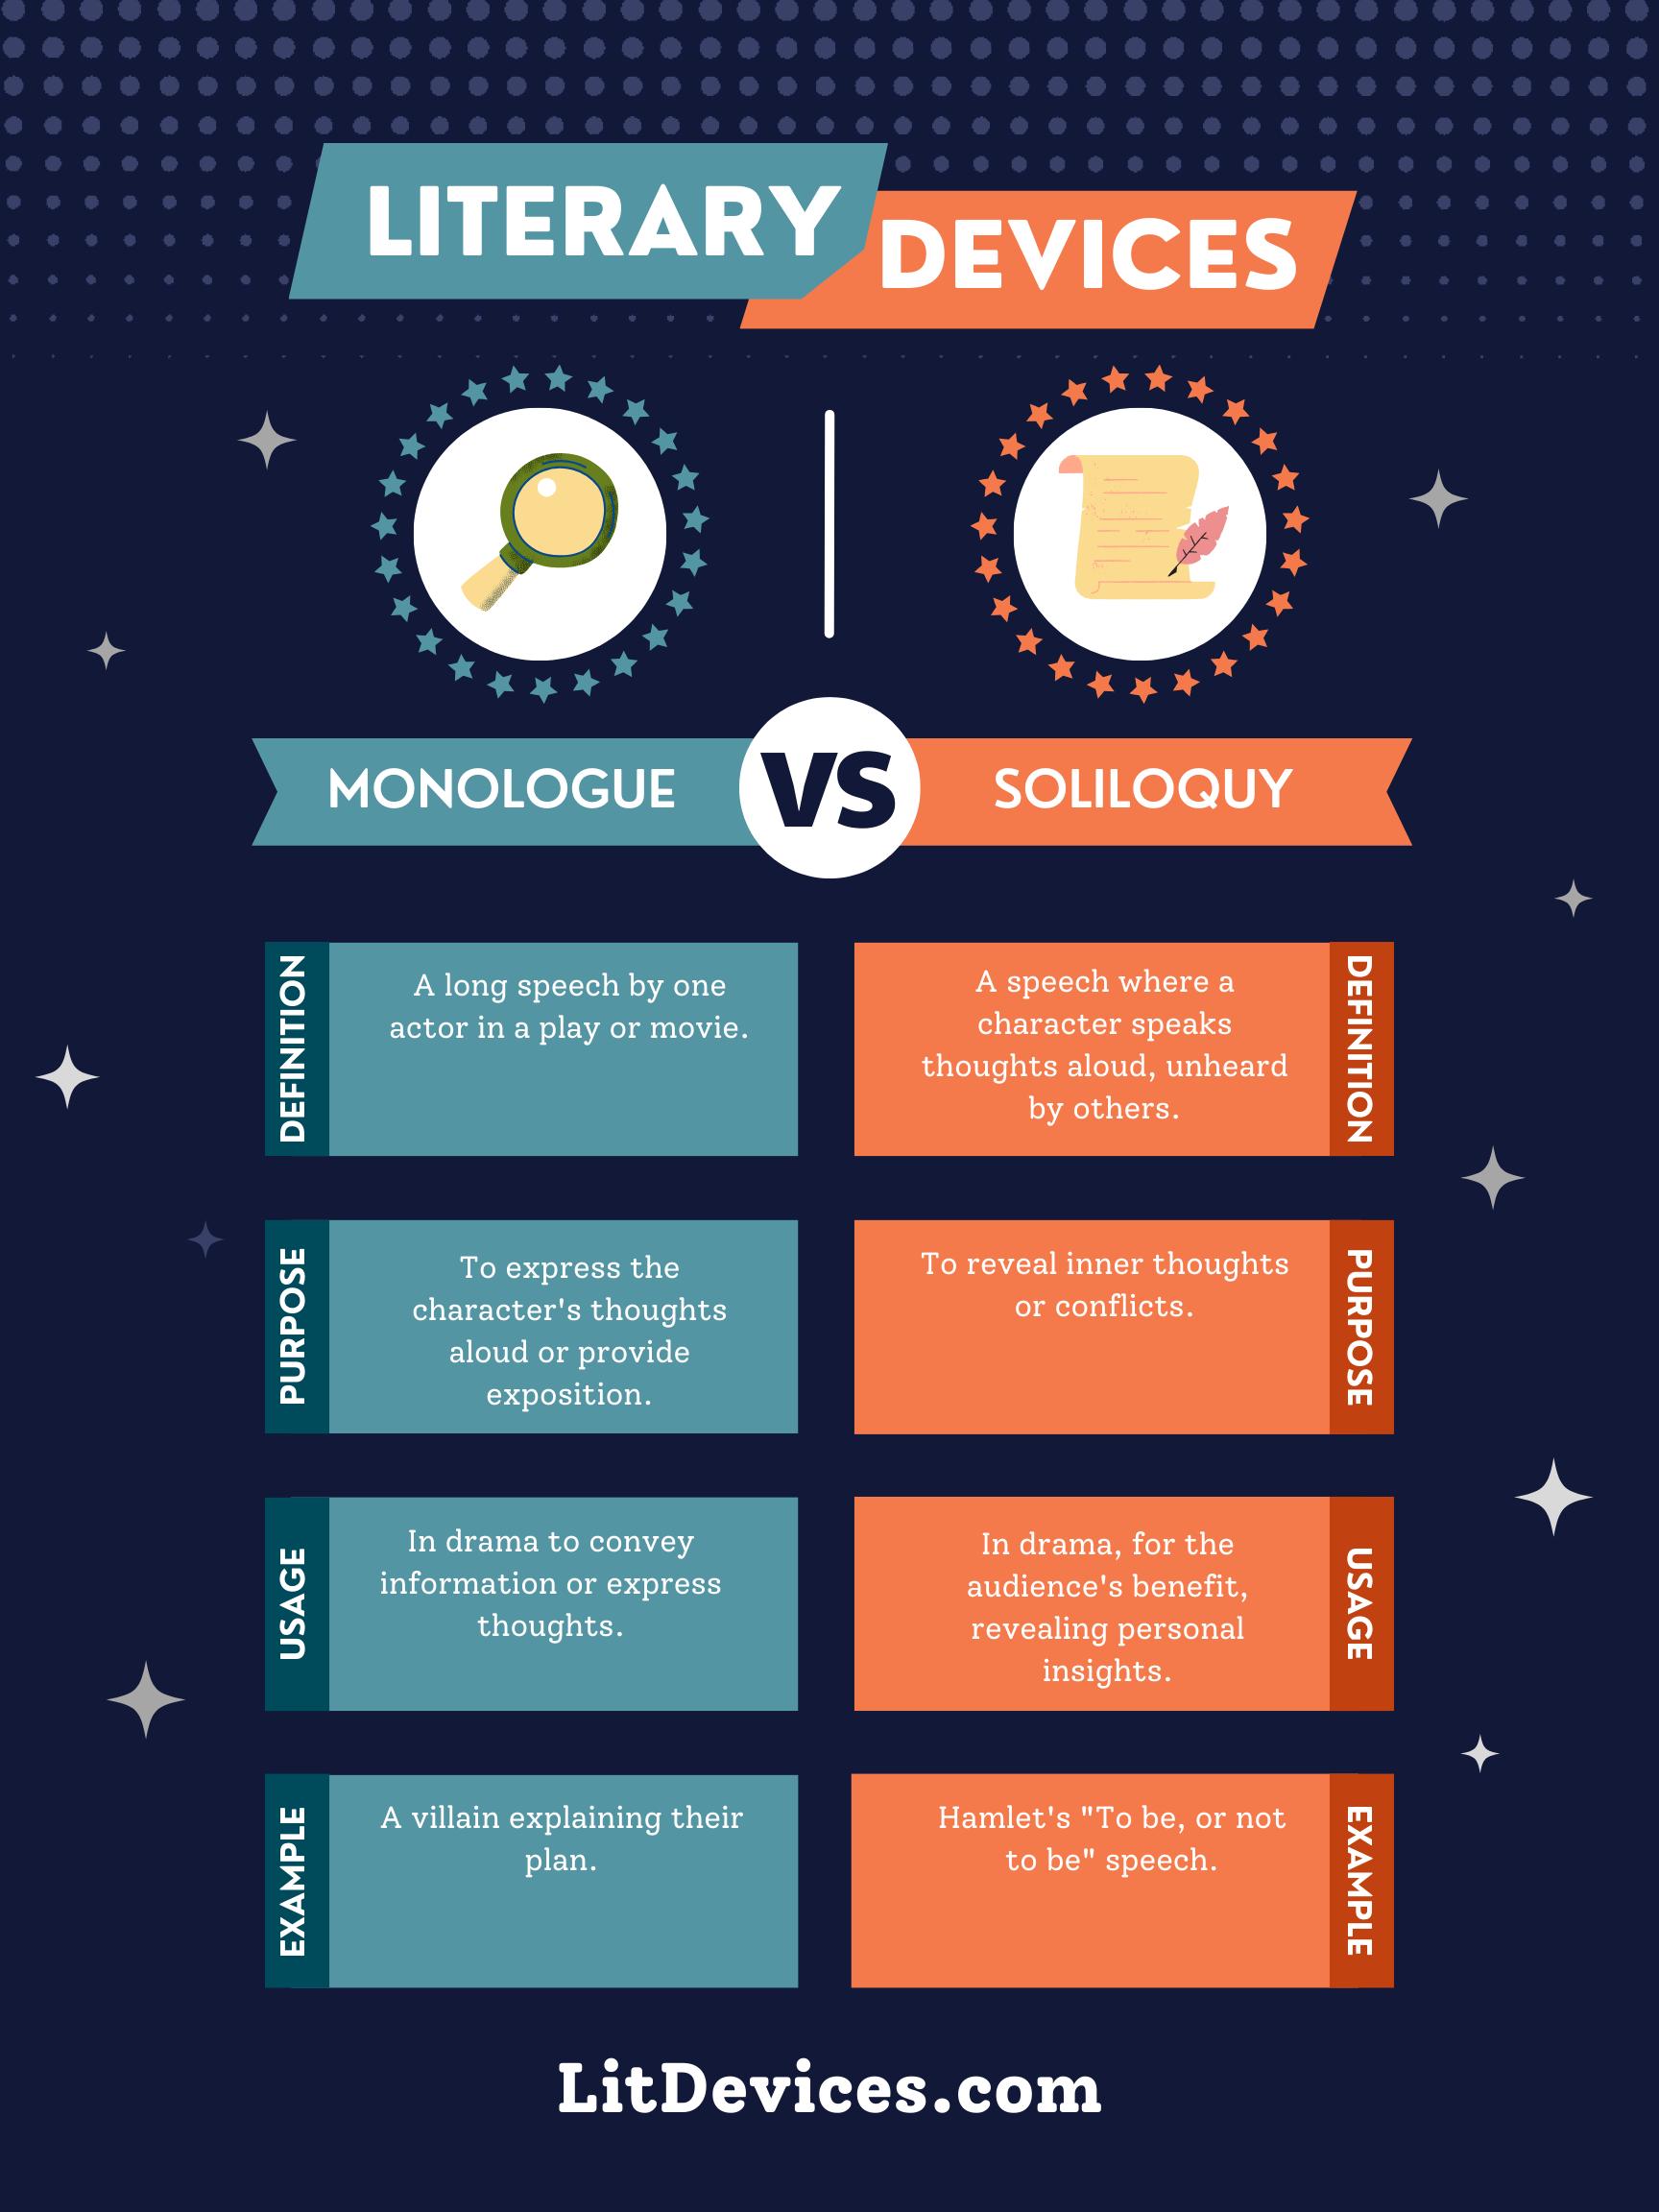 Monologue vs Soliloquy